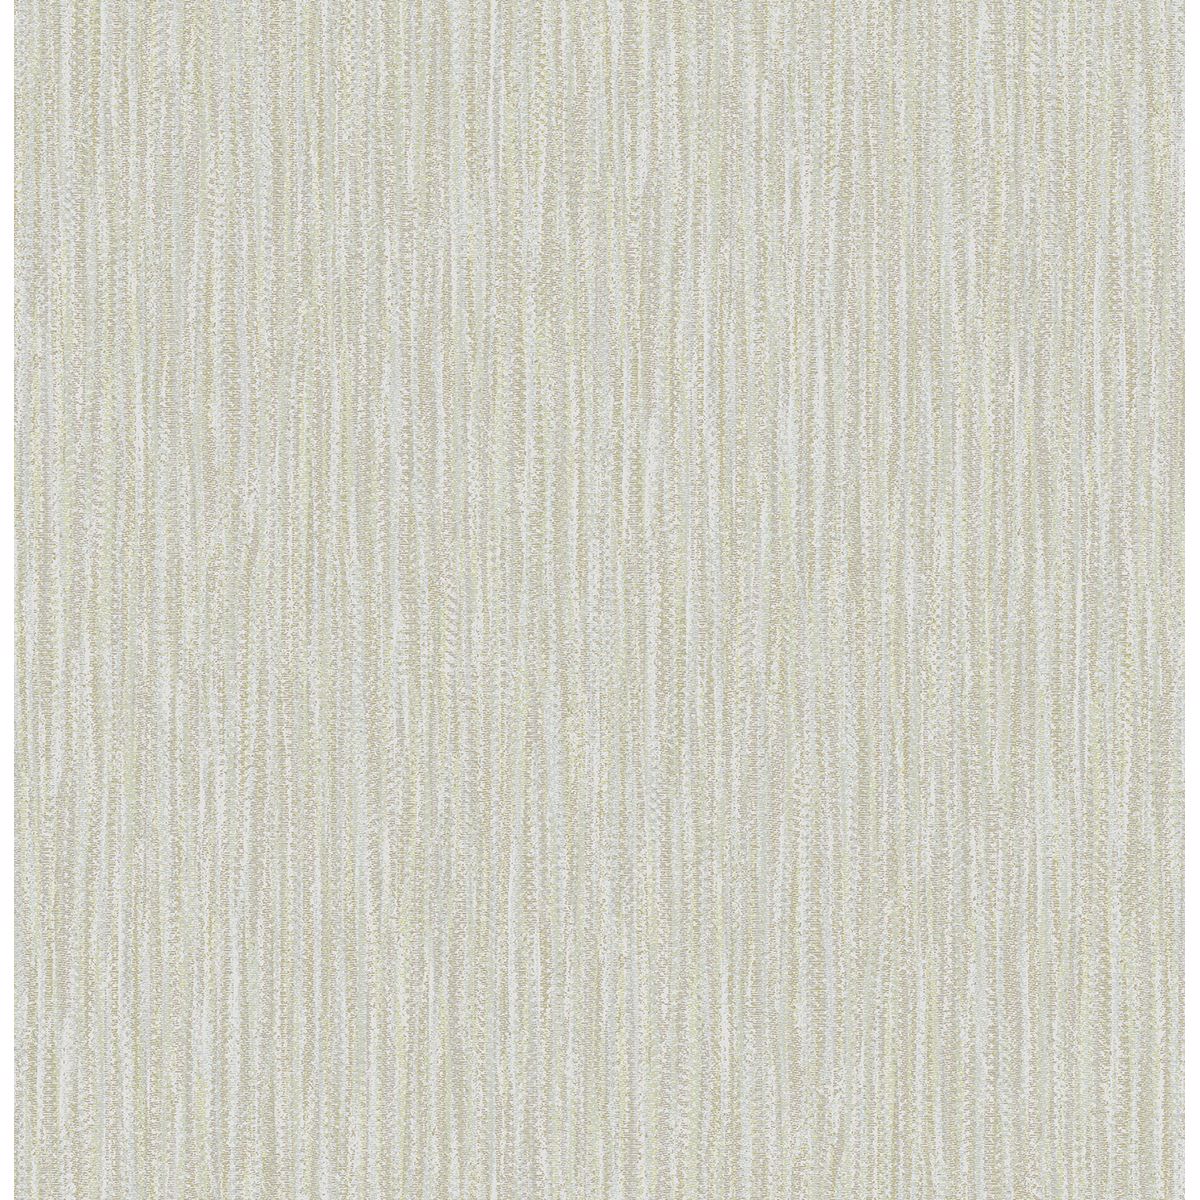 Picture of Raffia Thames Light Grey Faux Grasscloth Wallpaper